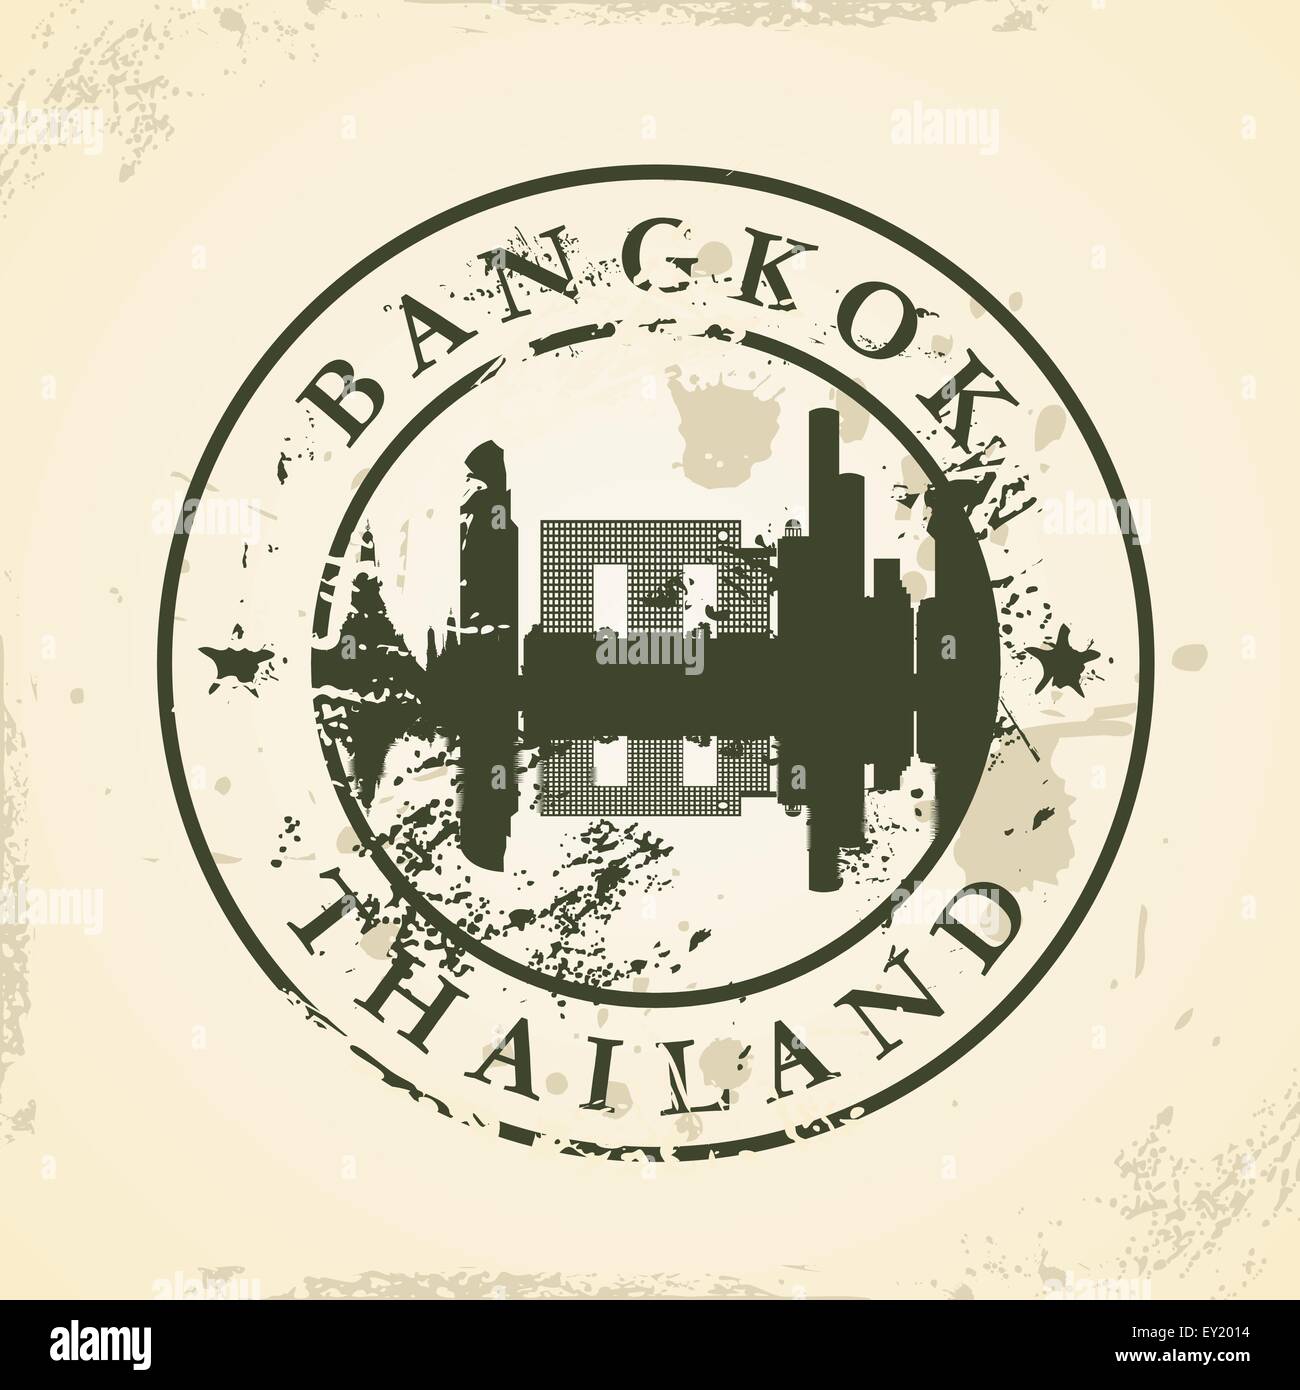 Grunge-Stempel mit Bangkok, Thailand - Vektor-illustration Stock Vektor